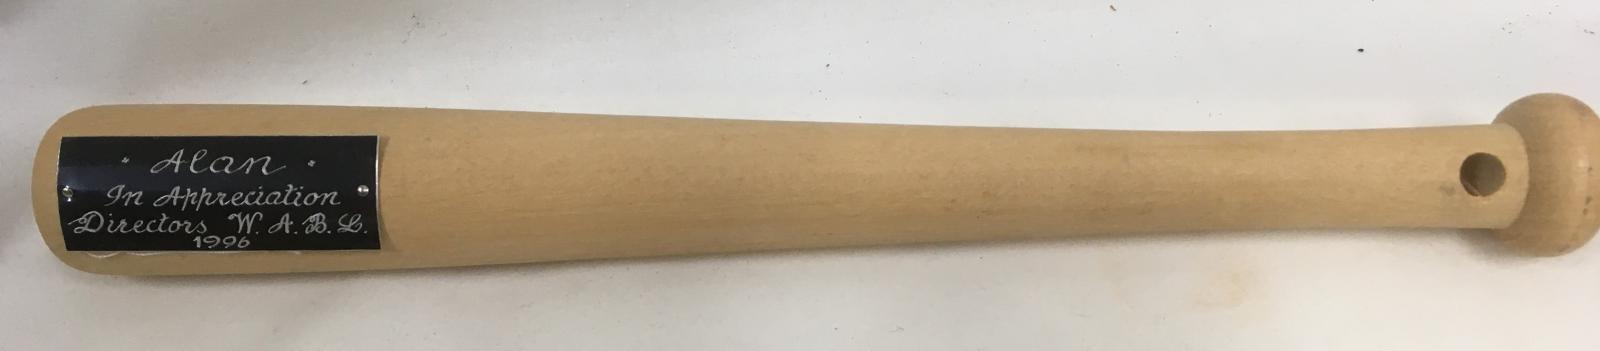 Miniature commemorative baseball bat presented to Alan Luscombe - 1996